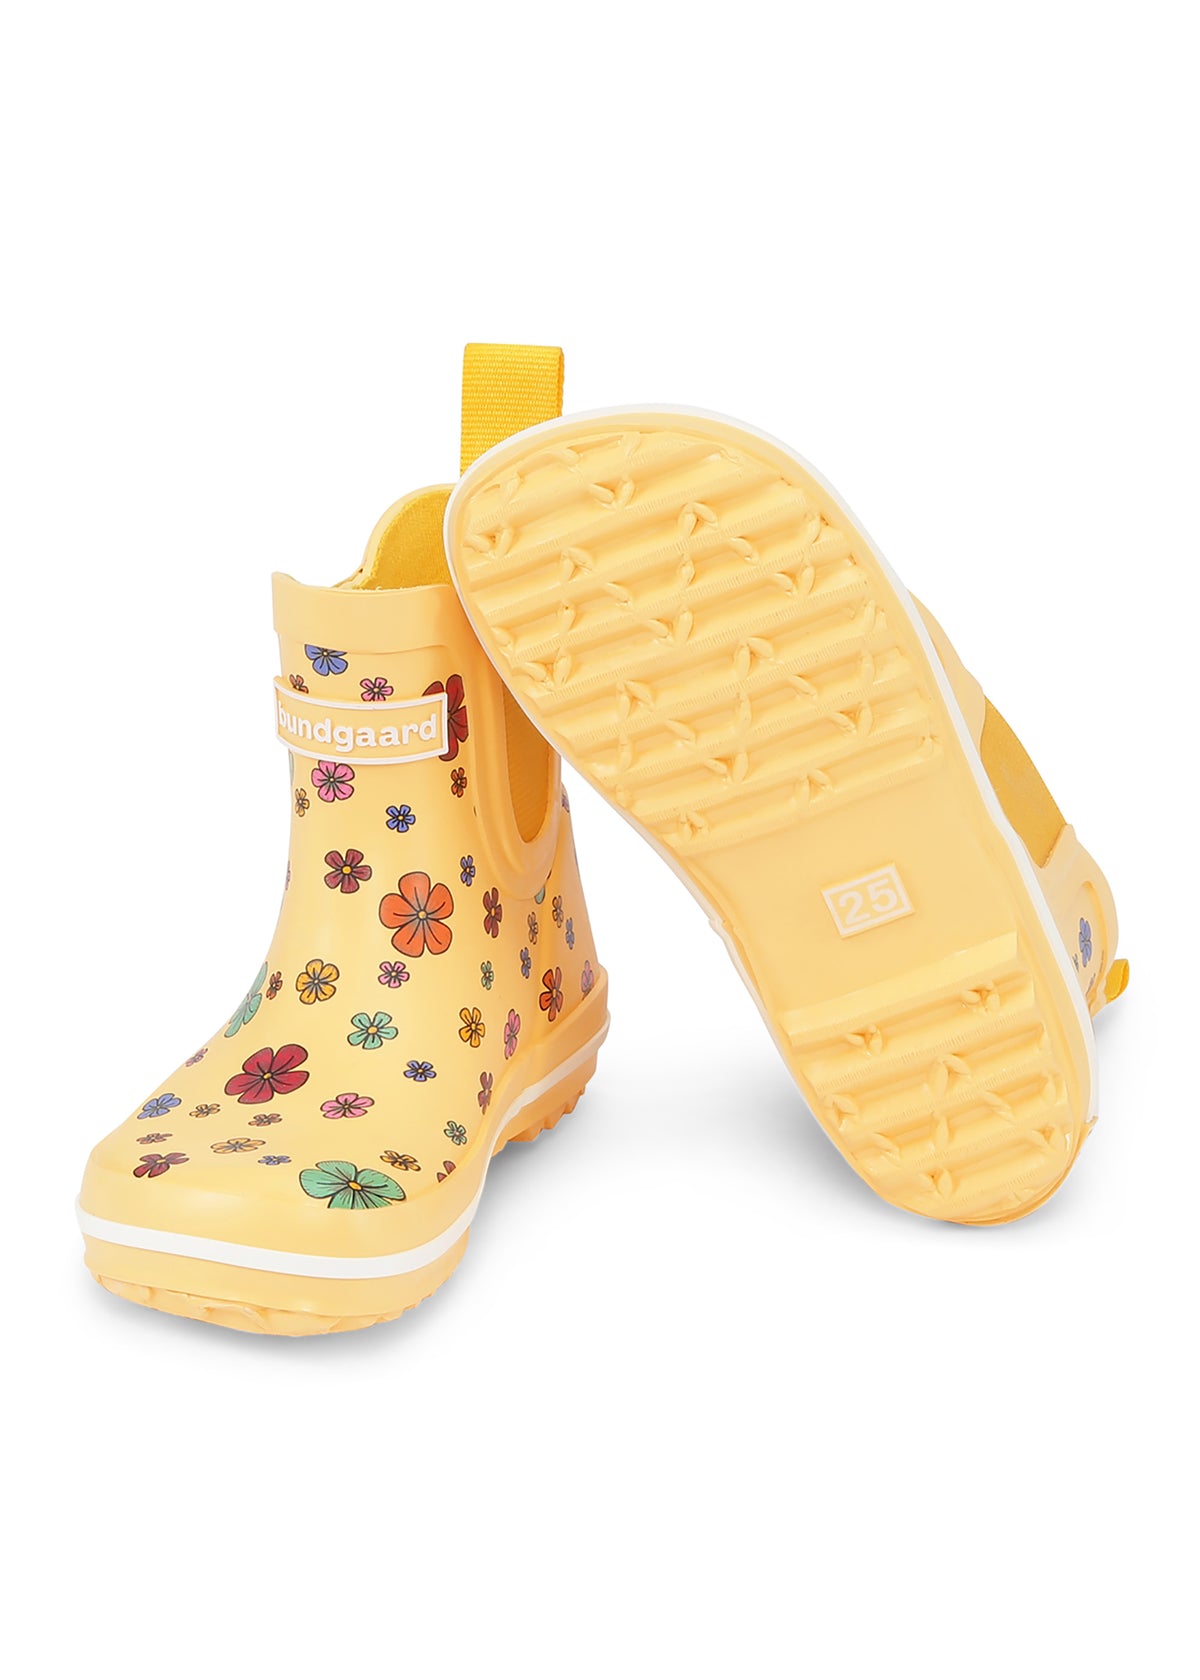 Rubber boots - short stem, Cosmos Flower, flowers on yellow base, Bundgaard Zero Heel